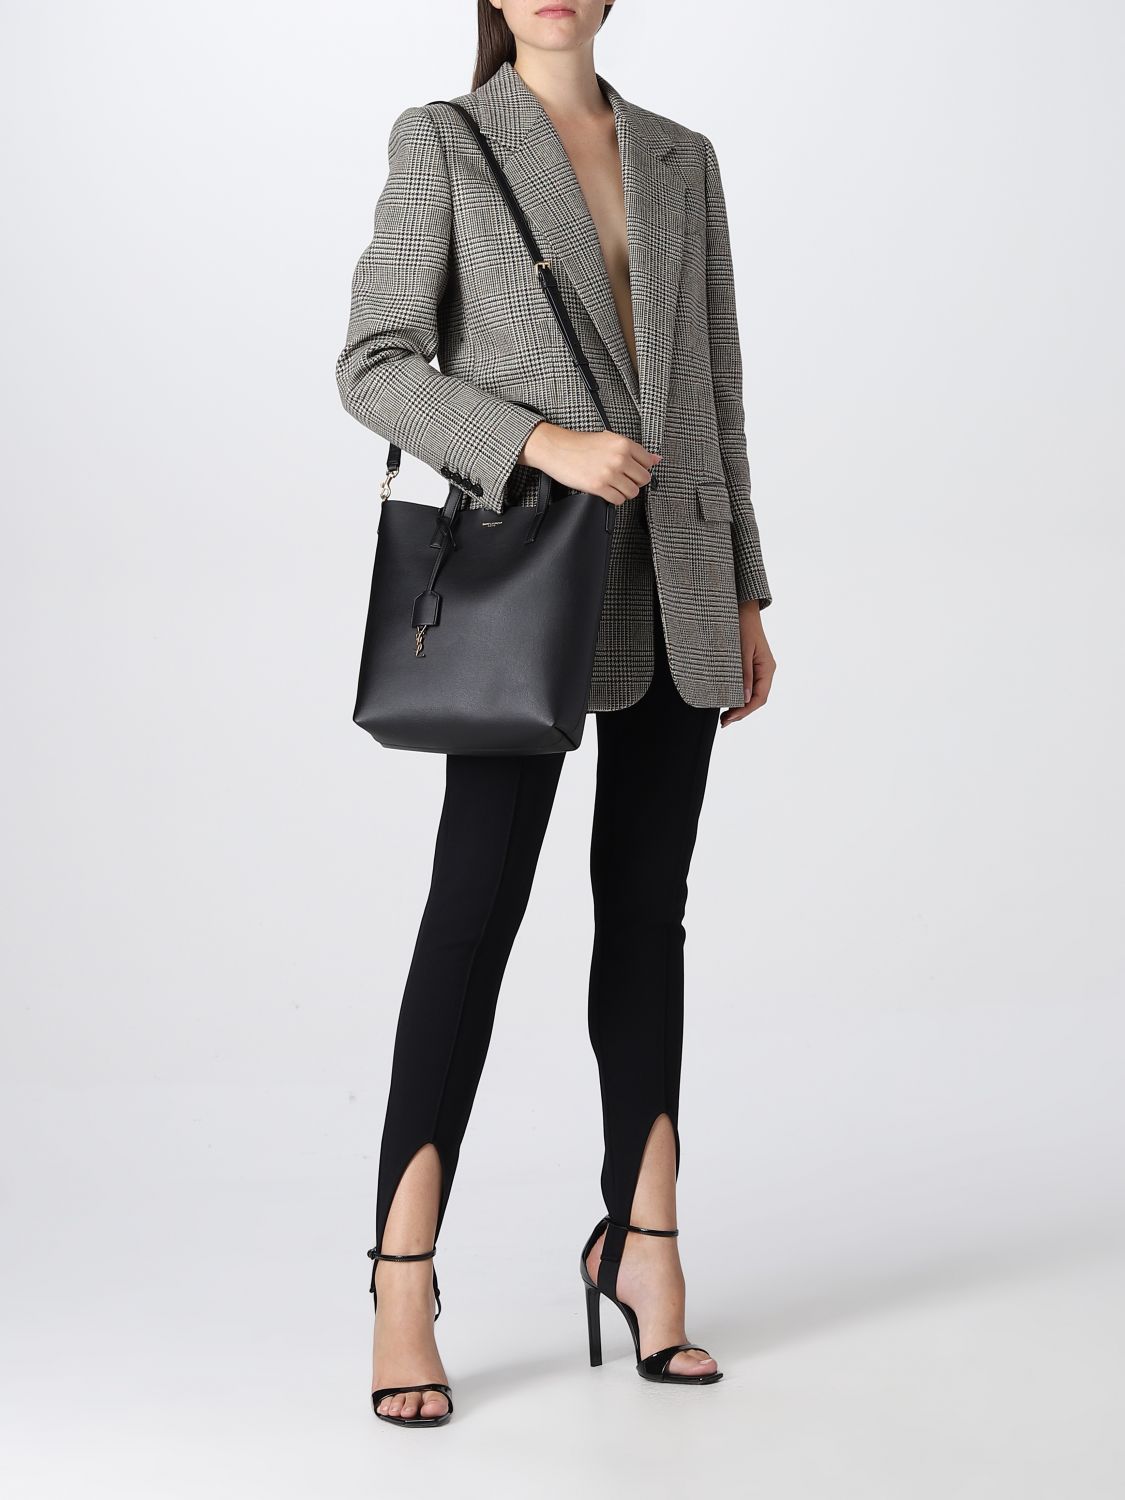 SAINT LAURENT: handbag for woman - Black | Saint Laurent handbag ...